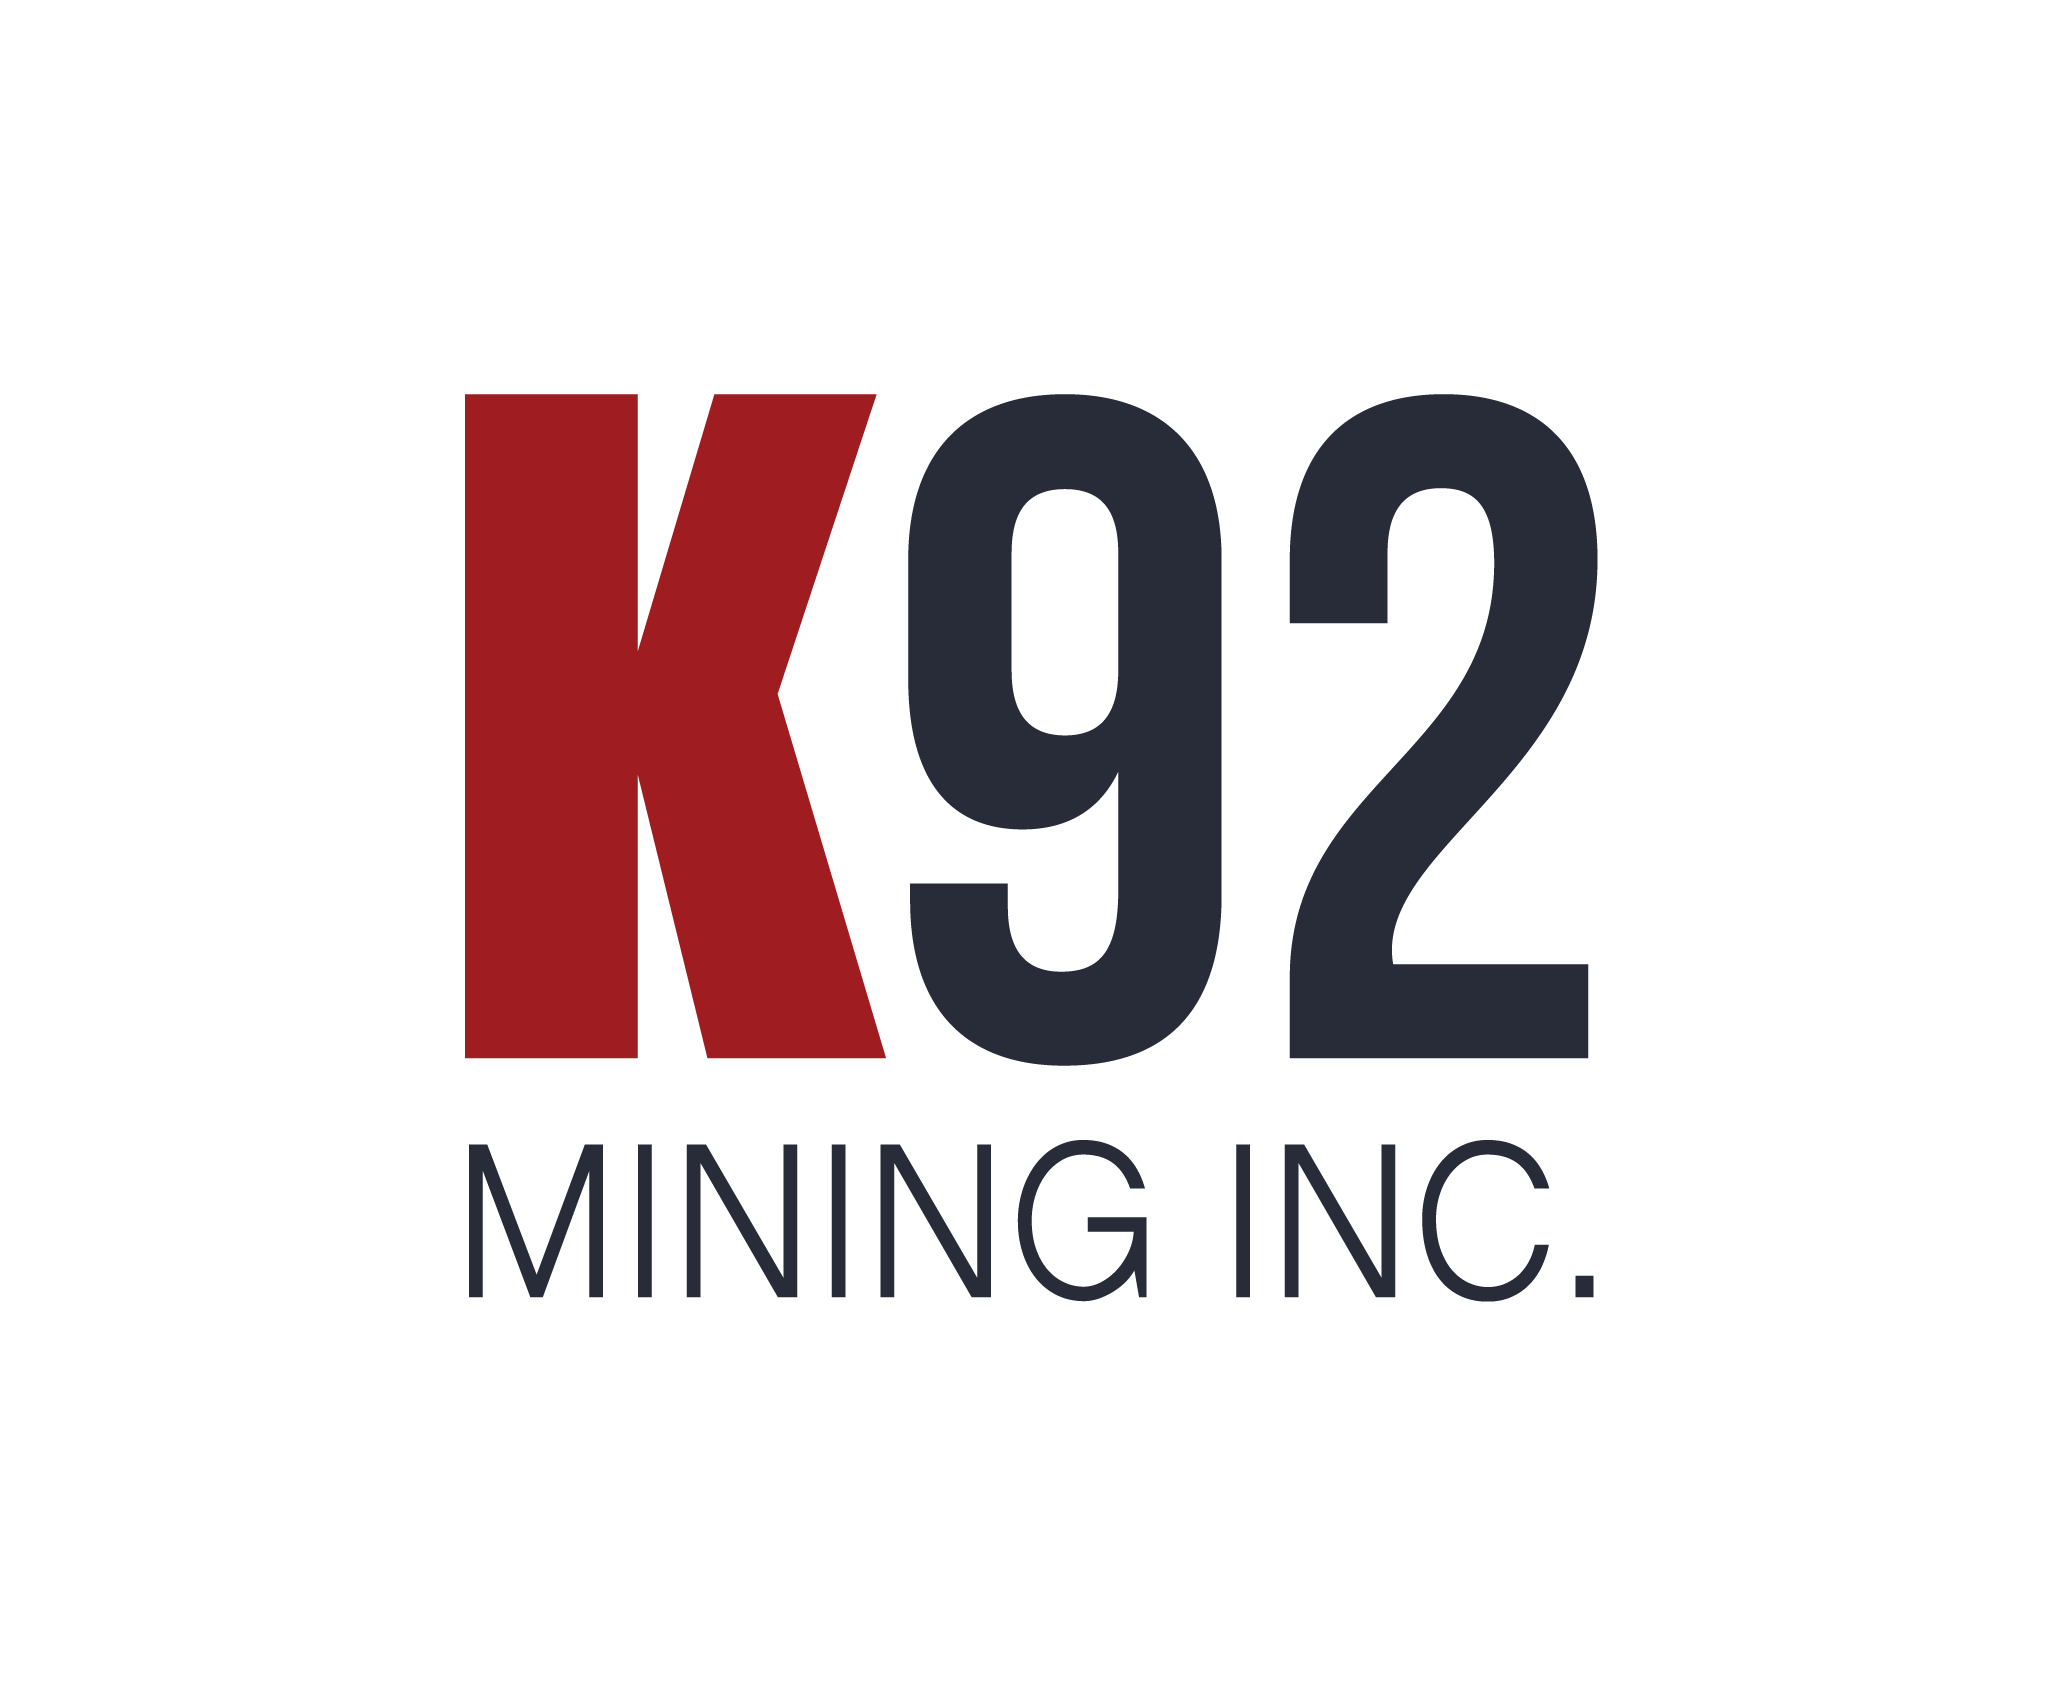 K92 Mining